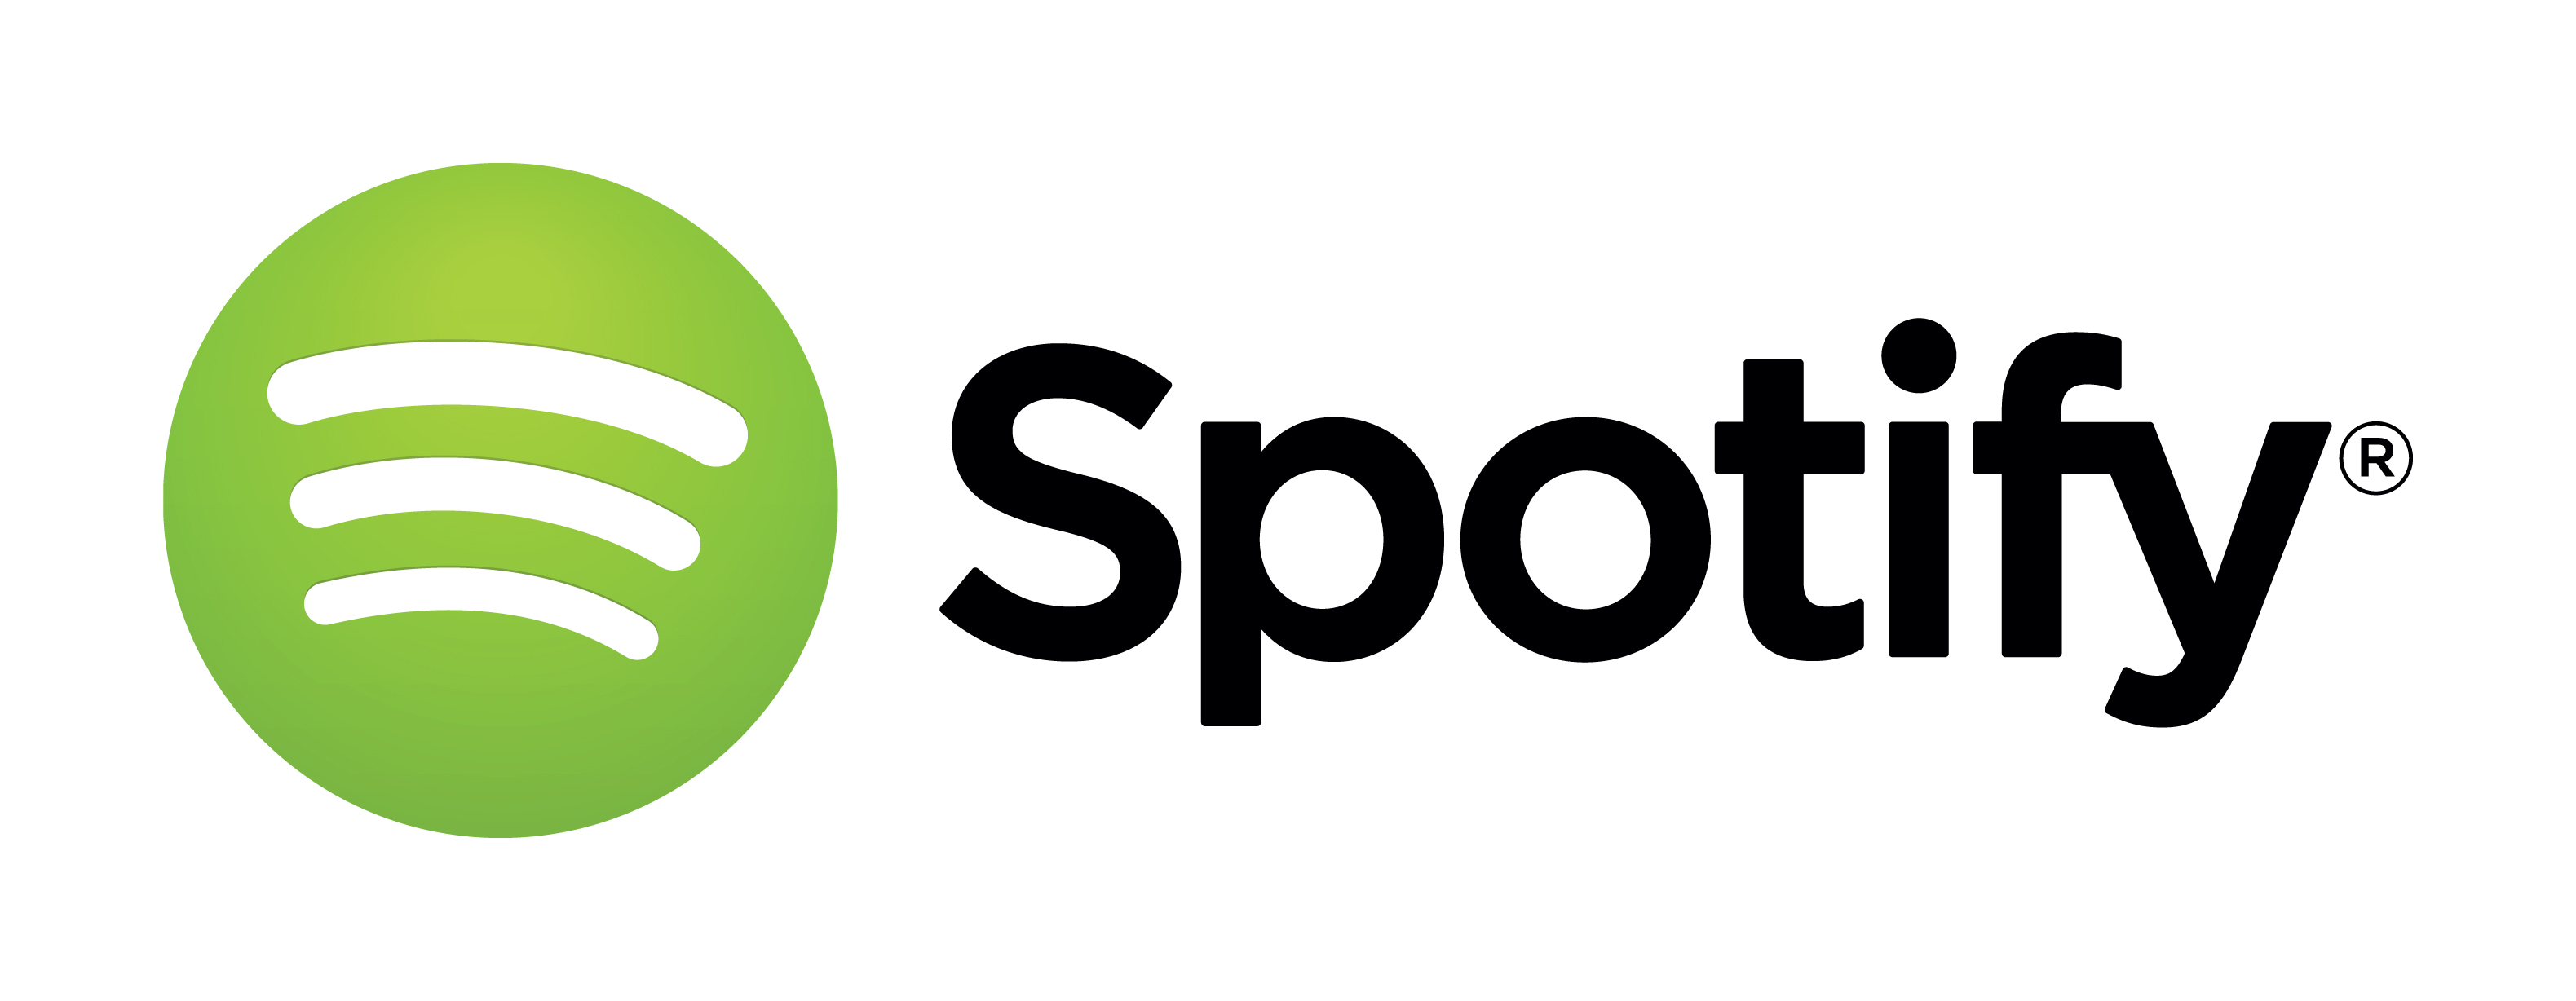 Spotify logo background by sixmonthslate on DeviantArt